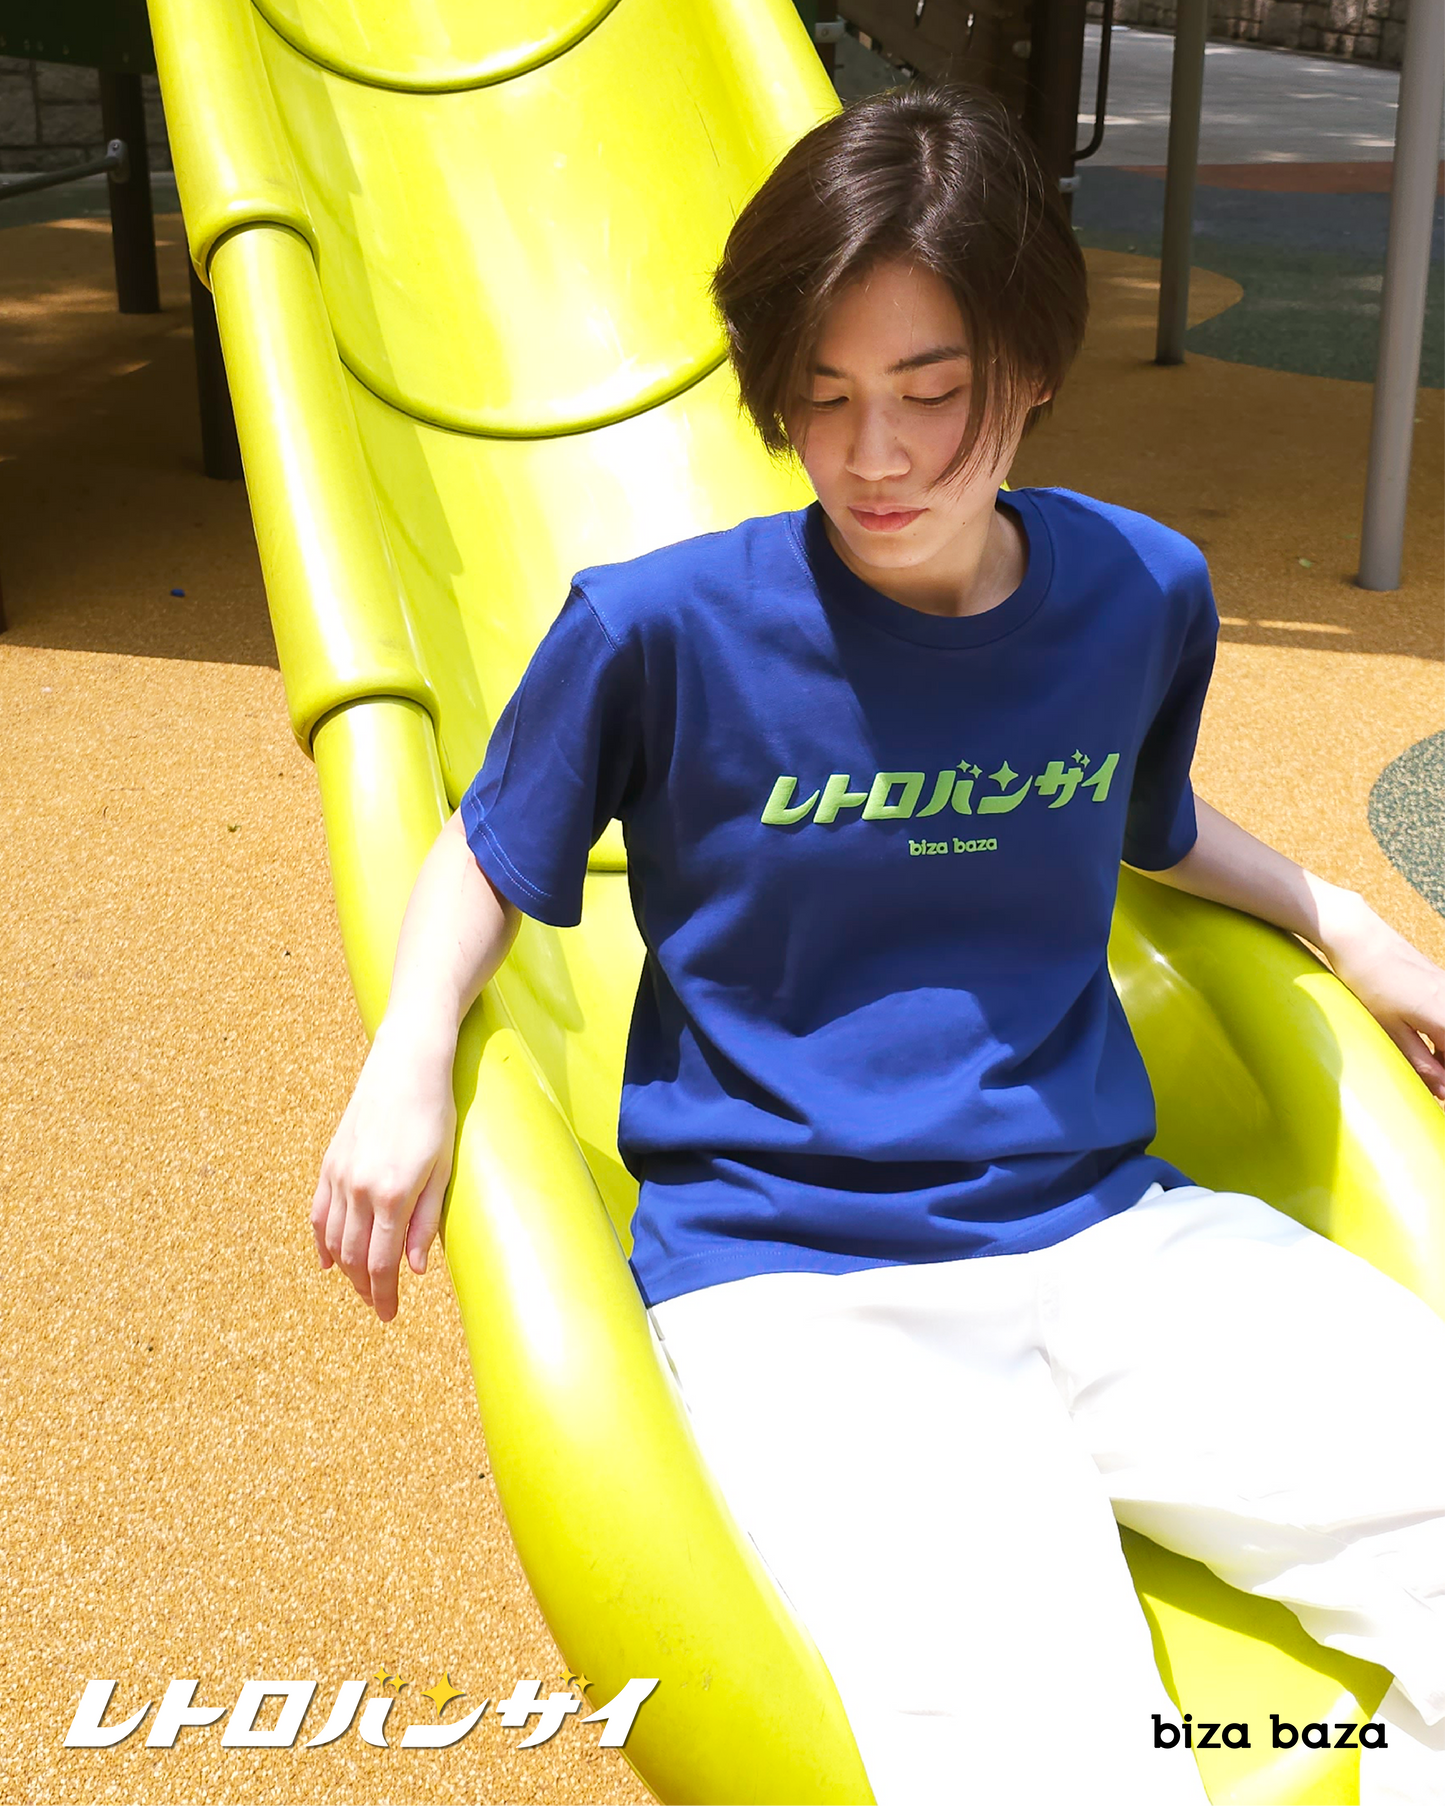 Retro Bansai T shirt